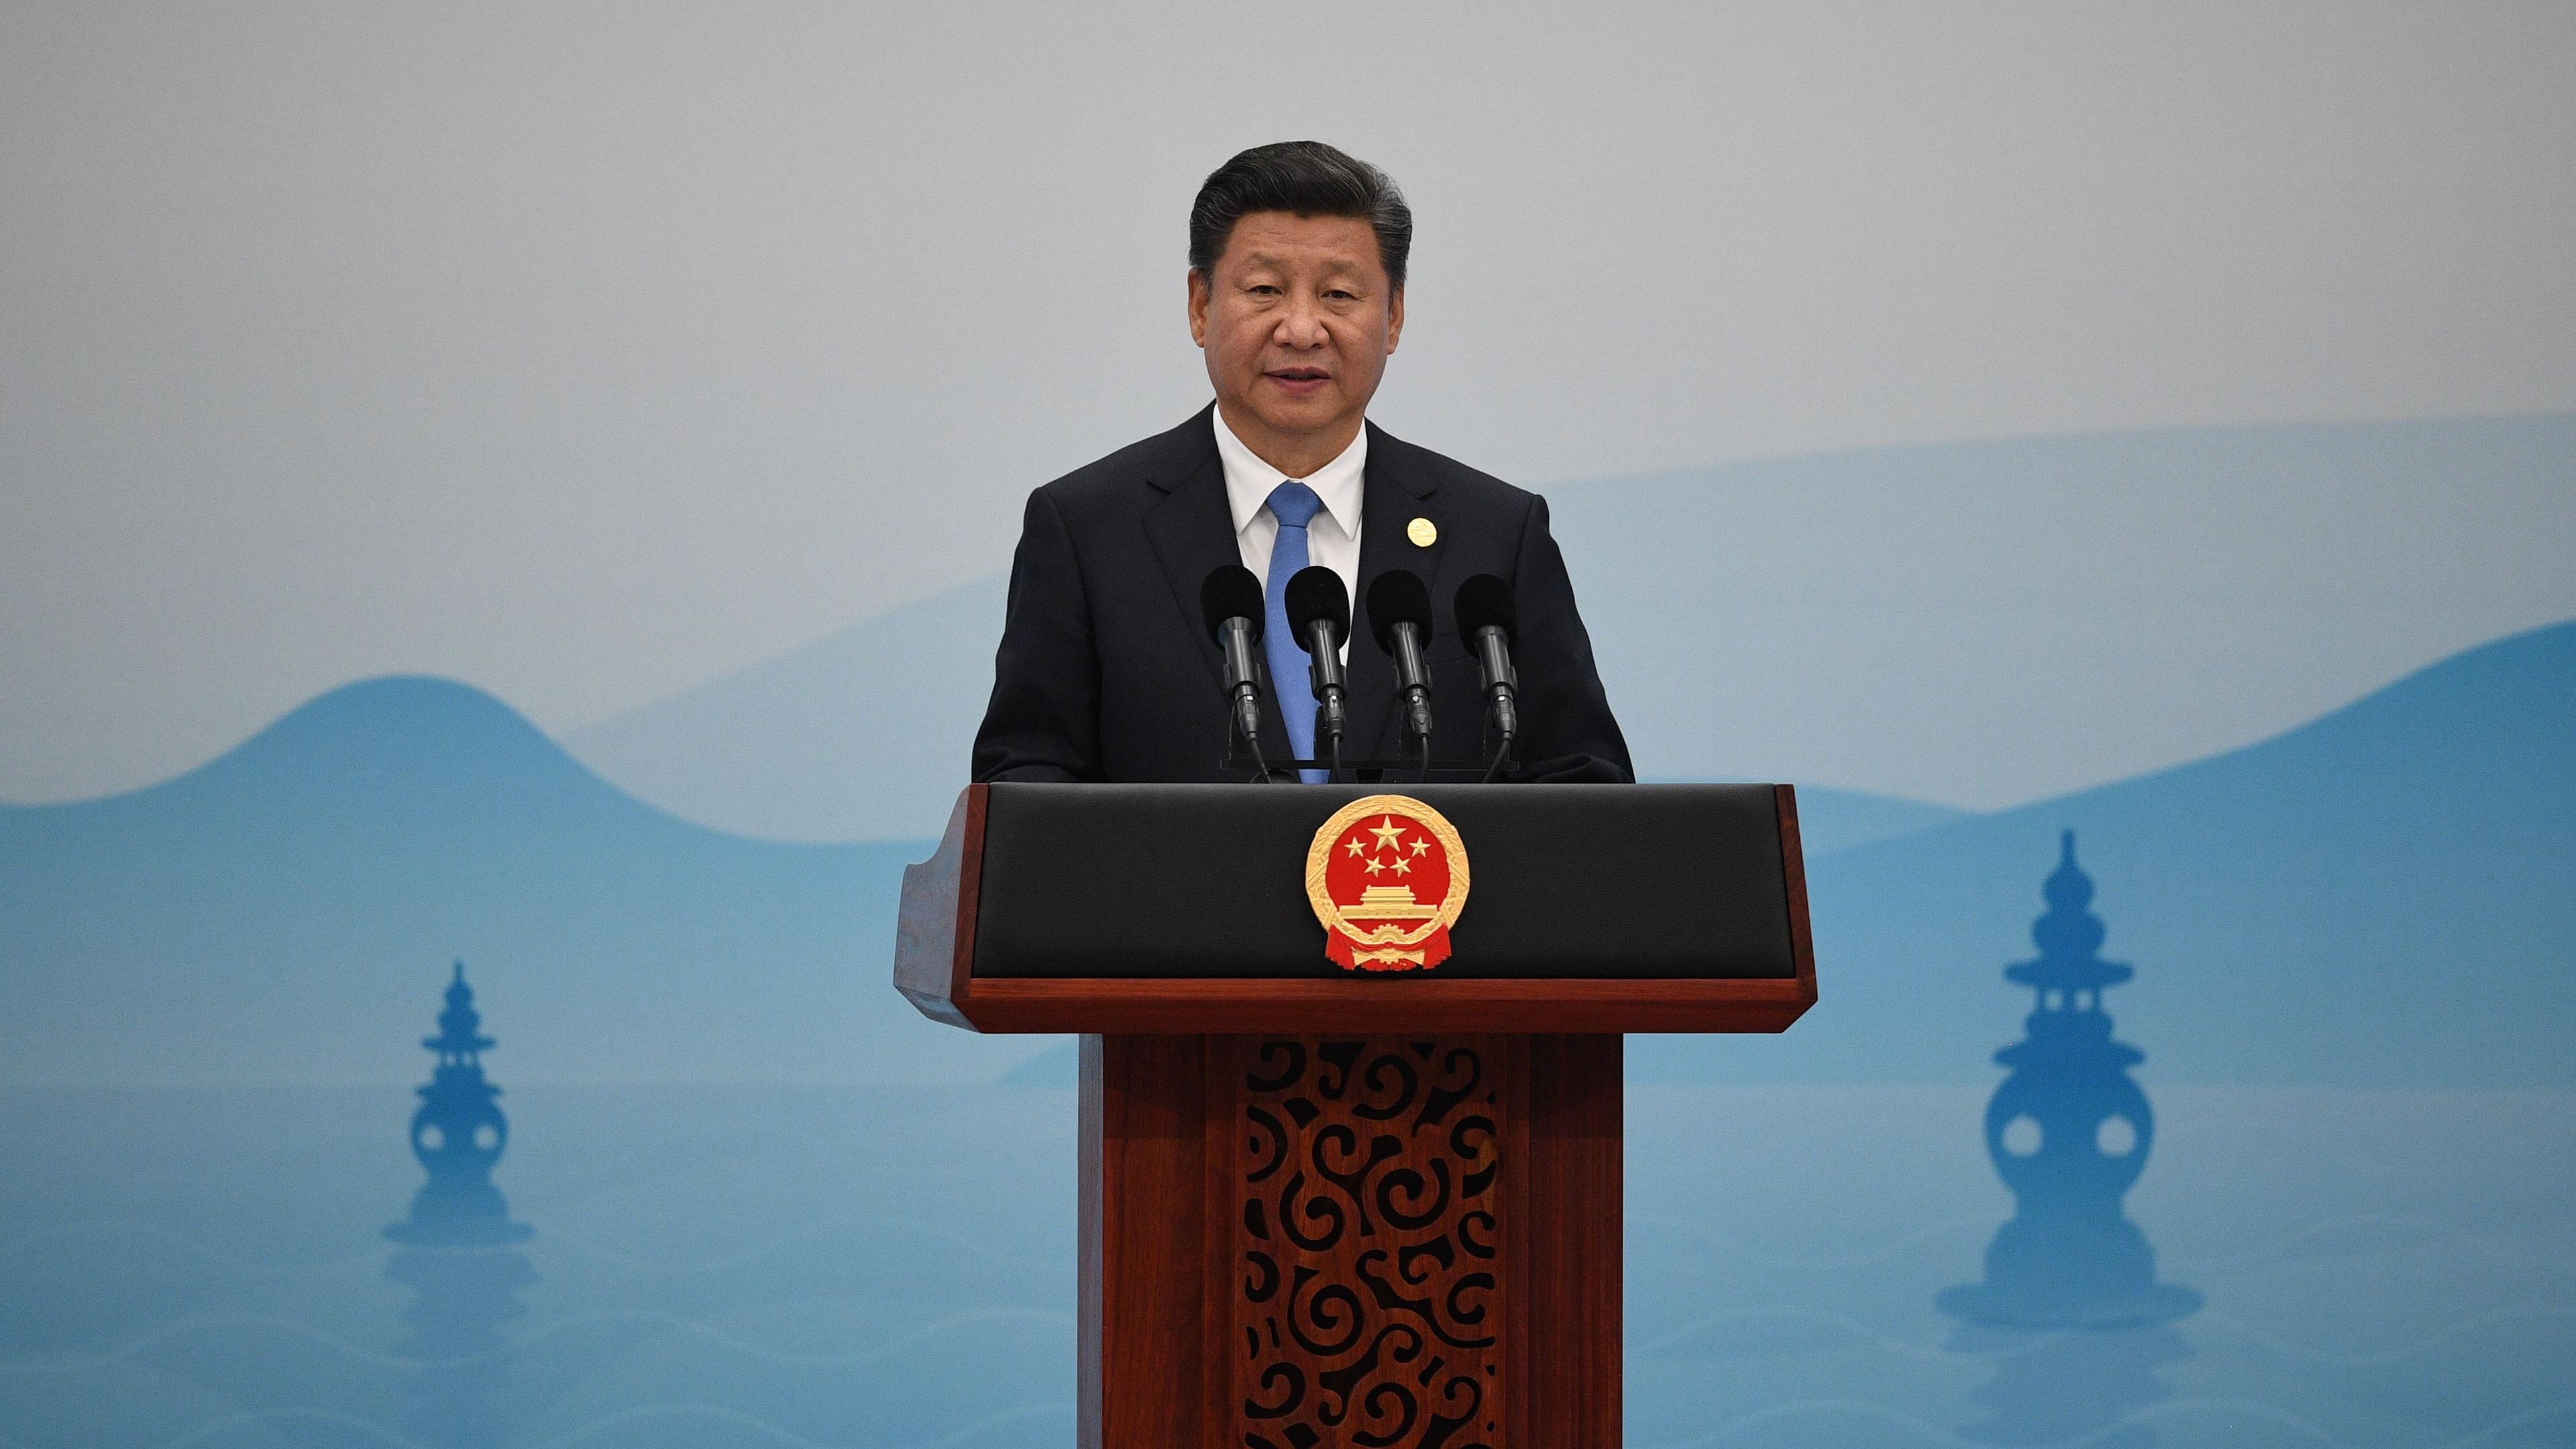 Kinas president Xi Jinping håller sitt avslutningstal under G20-mötet i Hangzhou.  (Foto: Johannes Eisele/AFP/Getty Images)